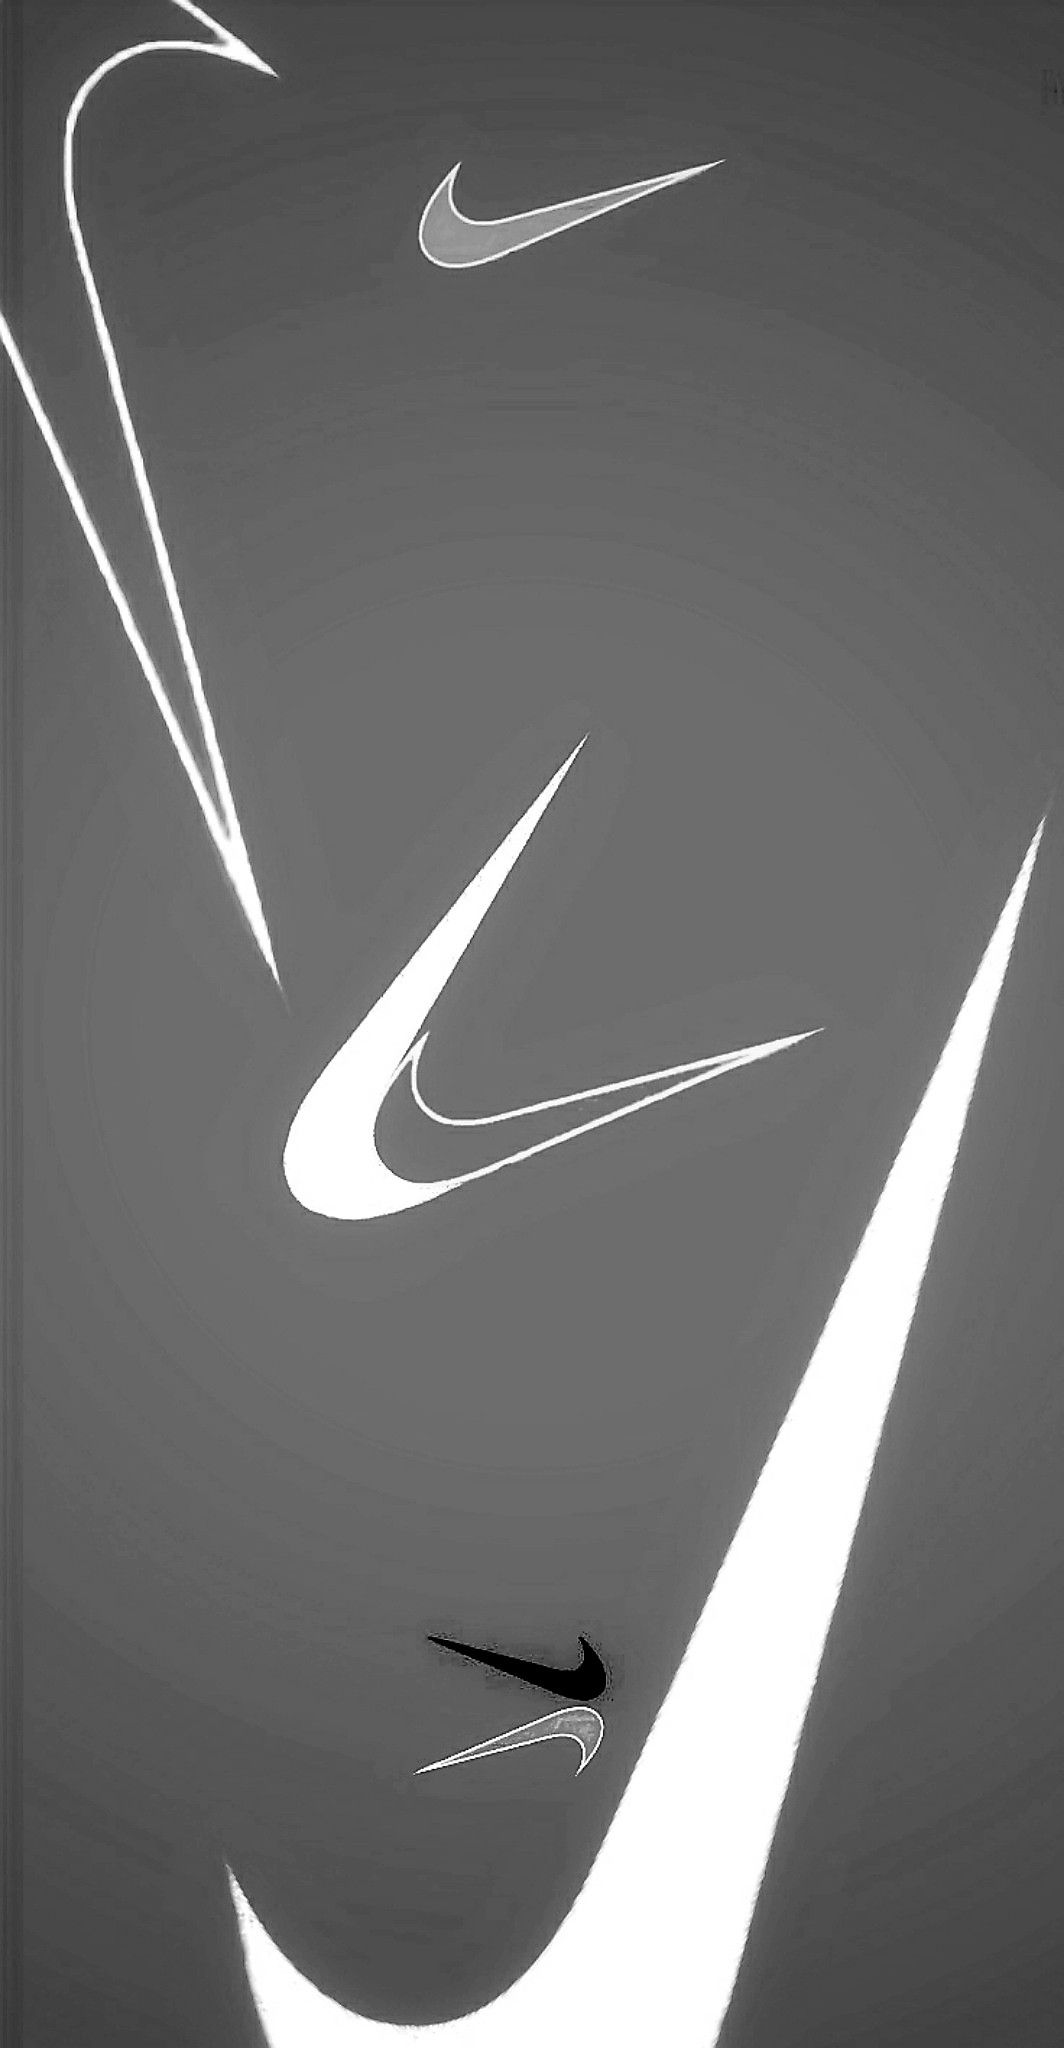 Nike wallpaper. Nike wallpaper, Nike background, Hypebeast iphone wallpaper